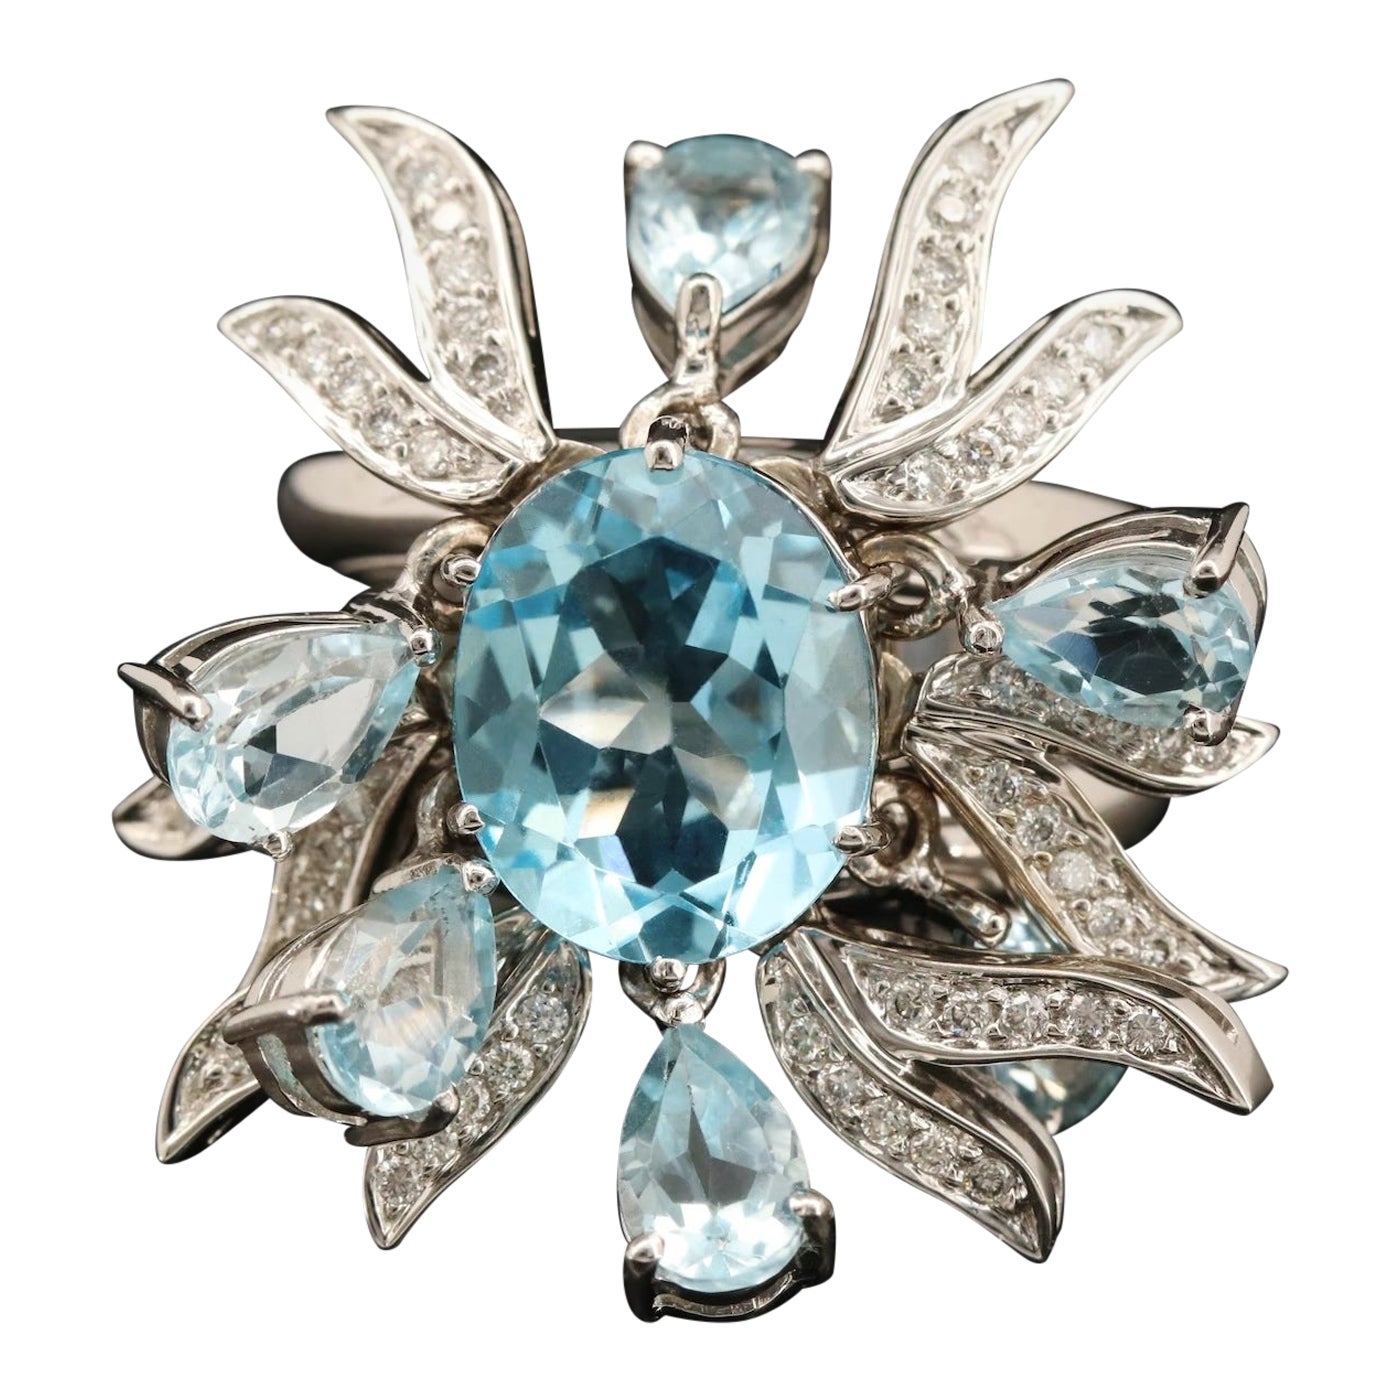 $22500 / Ruth Grieco for Denoir / 18K Sky Blue Topaz & Diamond Articulated Ring For Sale